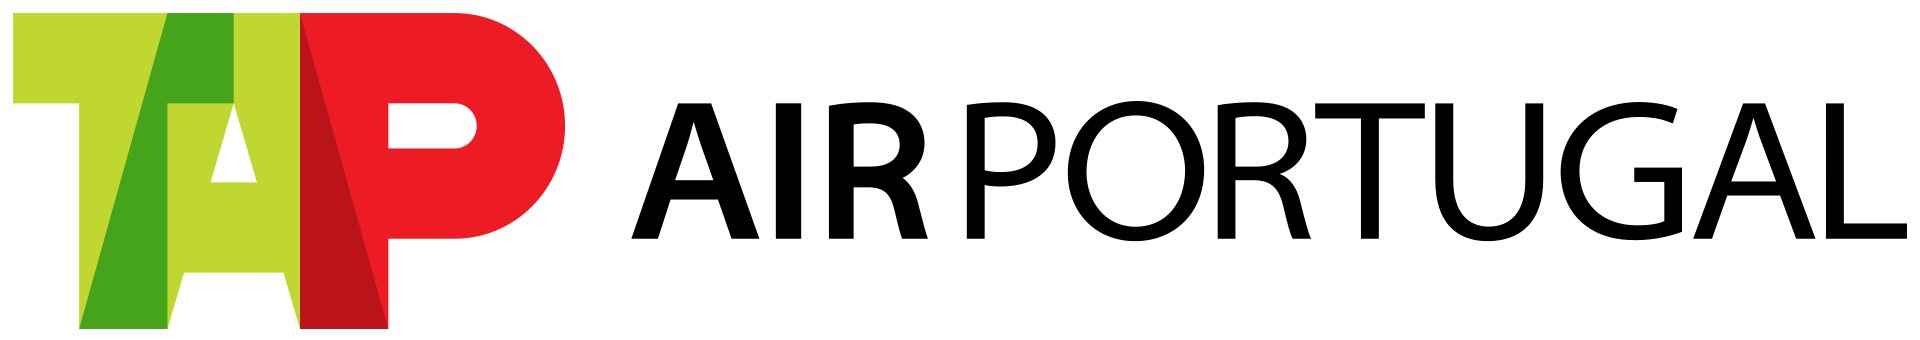 TAP Brand Logo